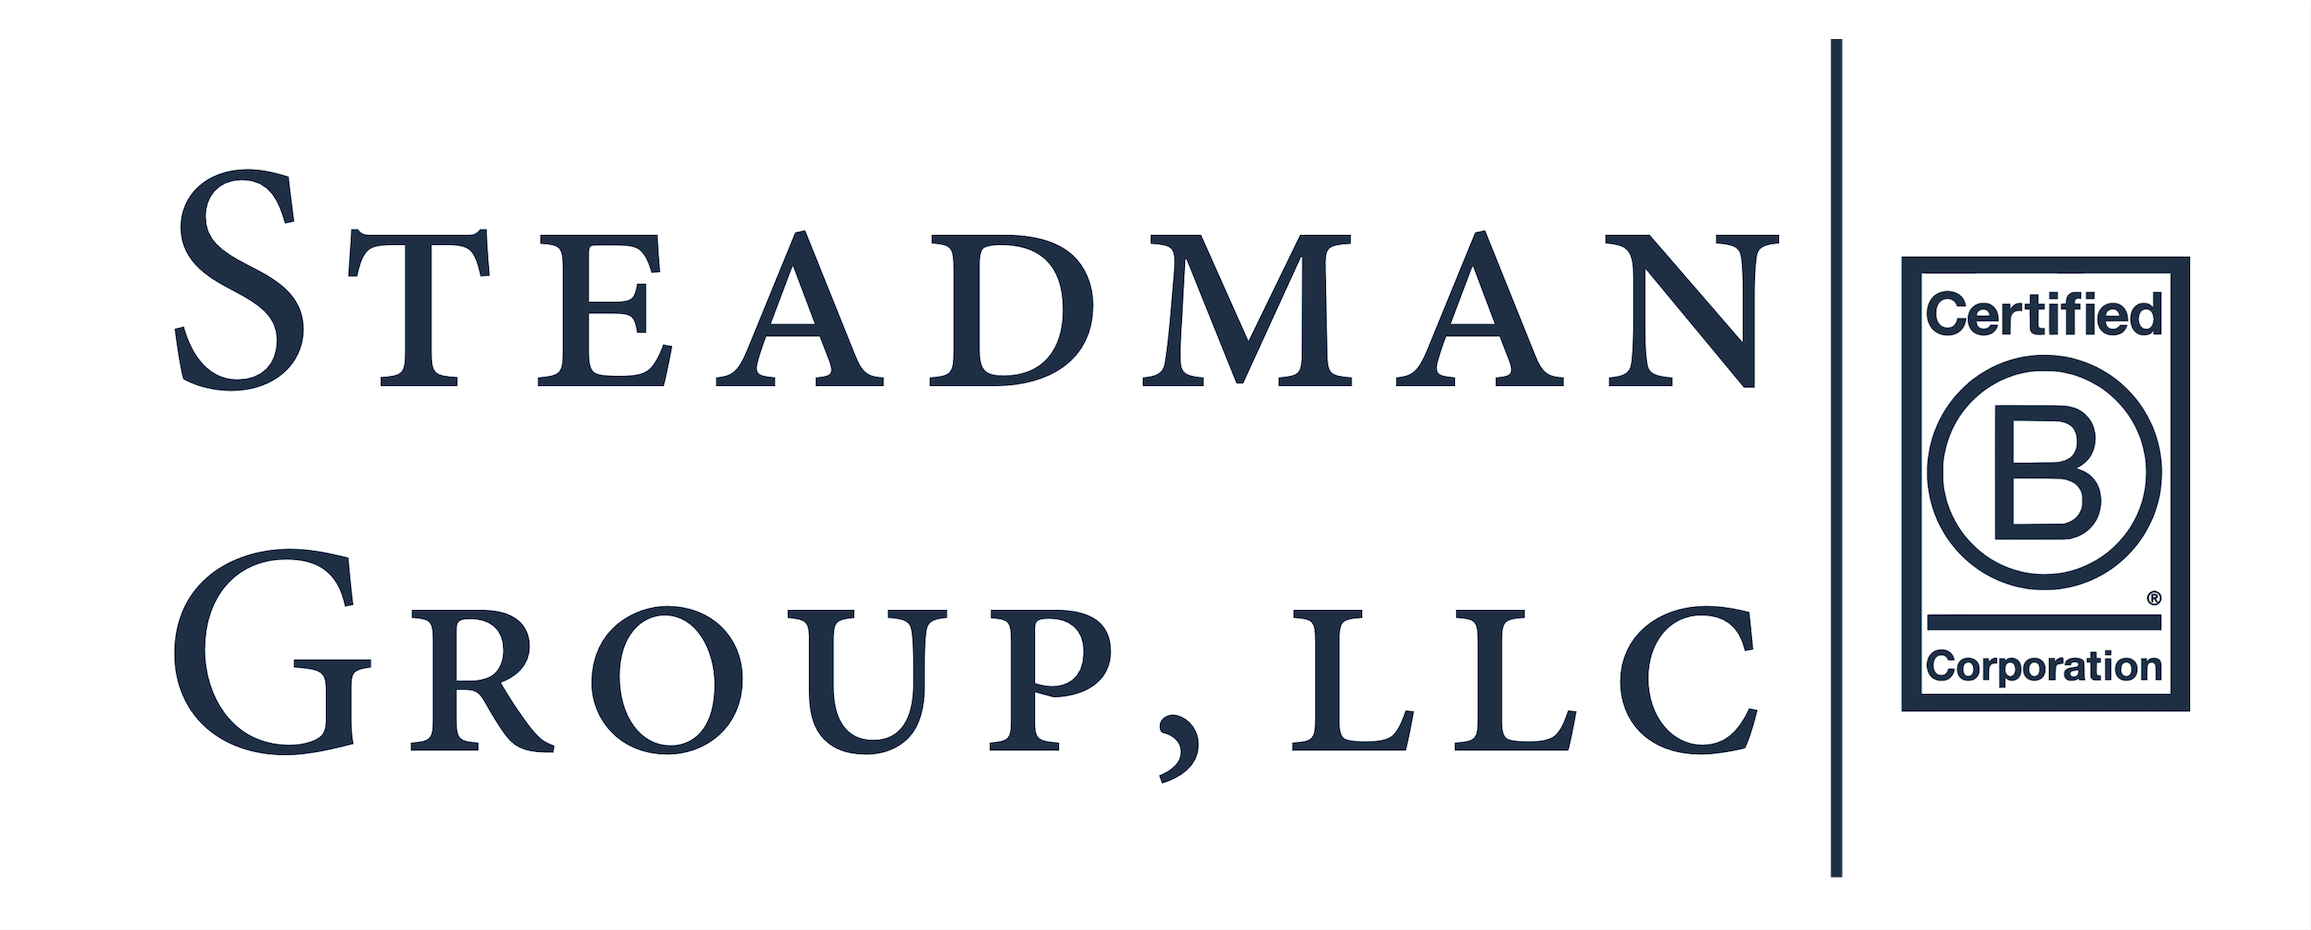 The Steadman Group